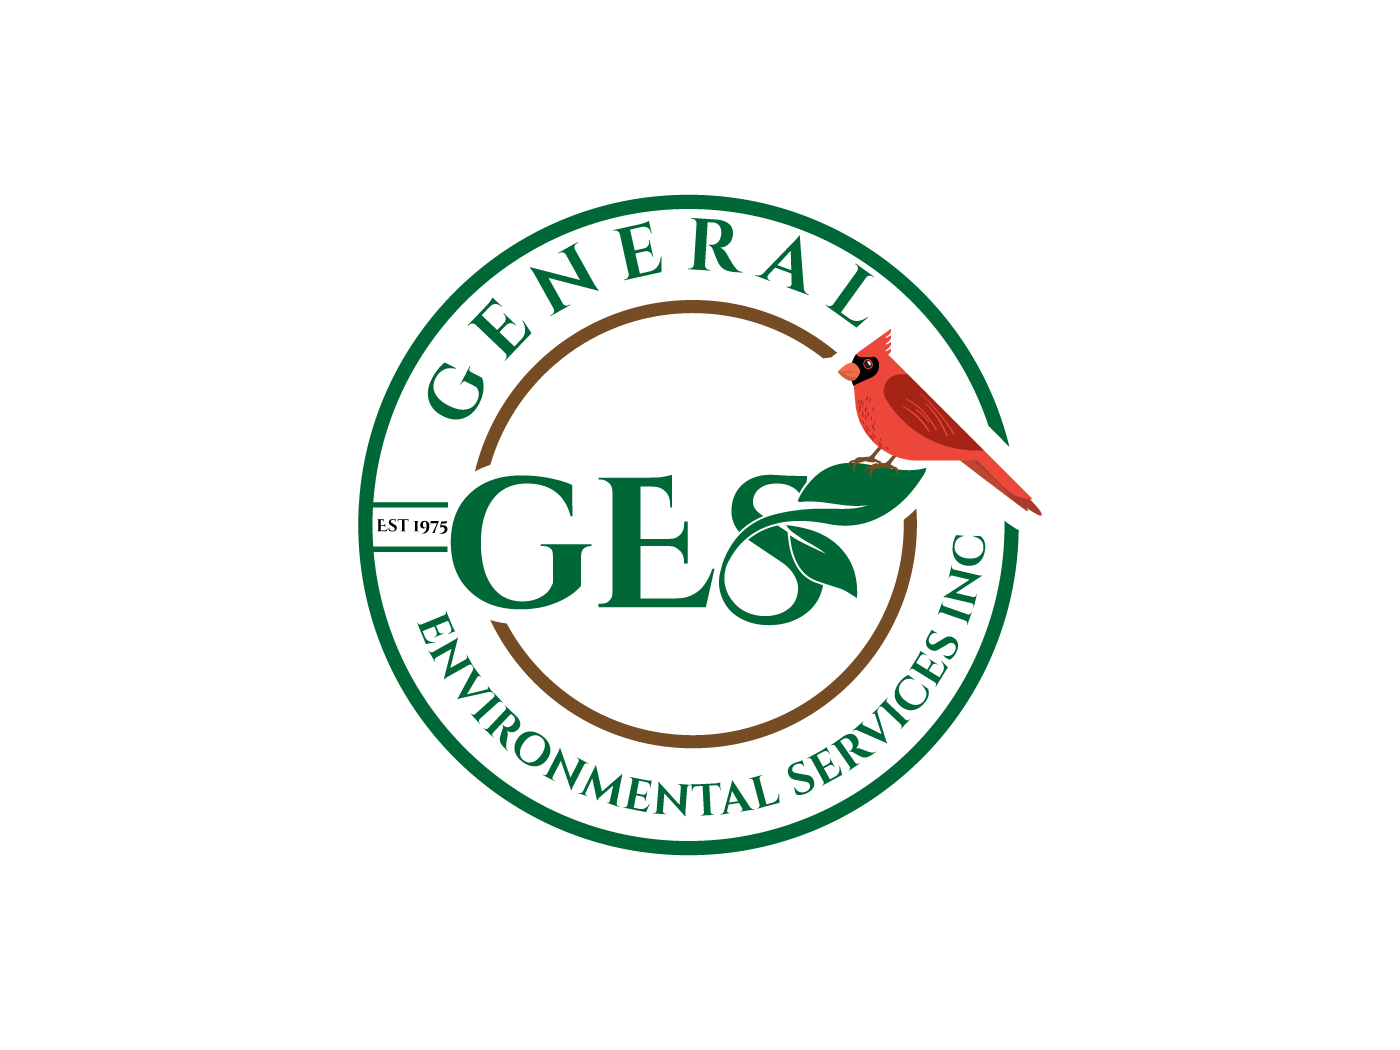 General Environmental Services Inc
